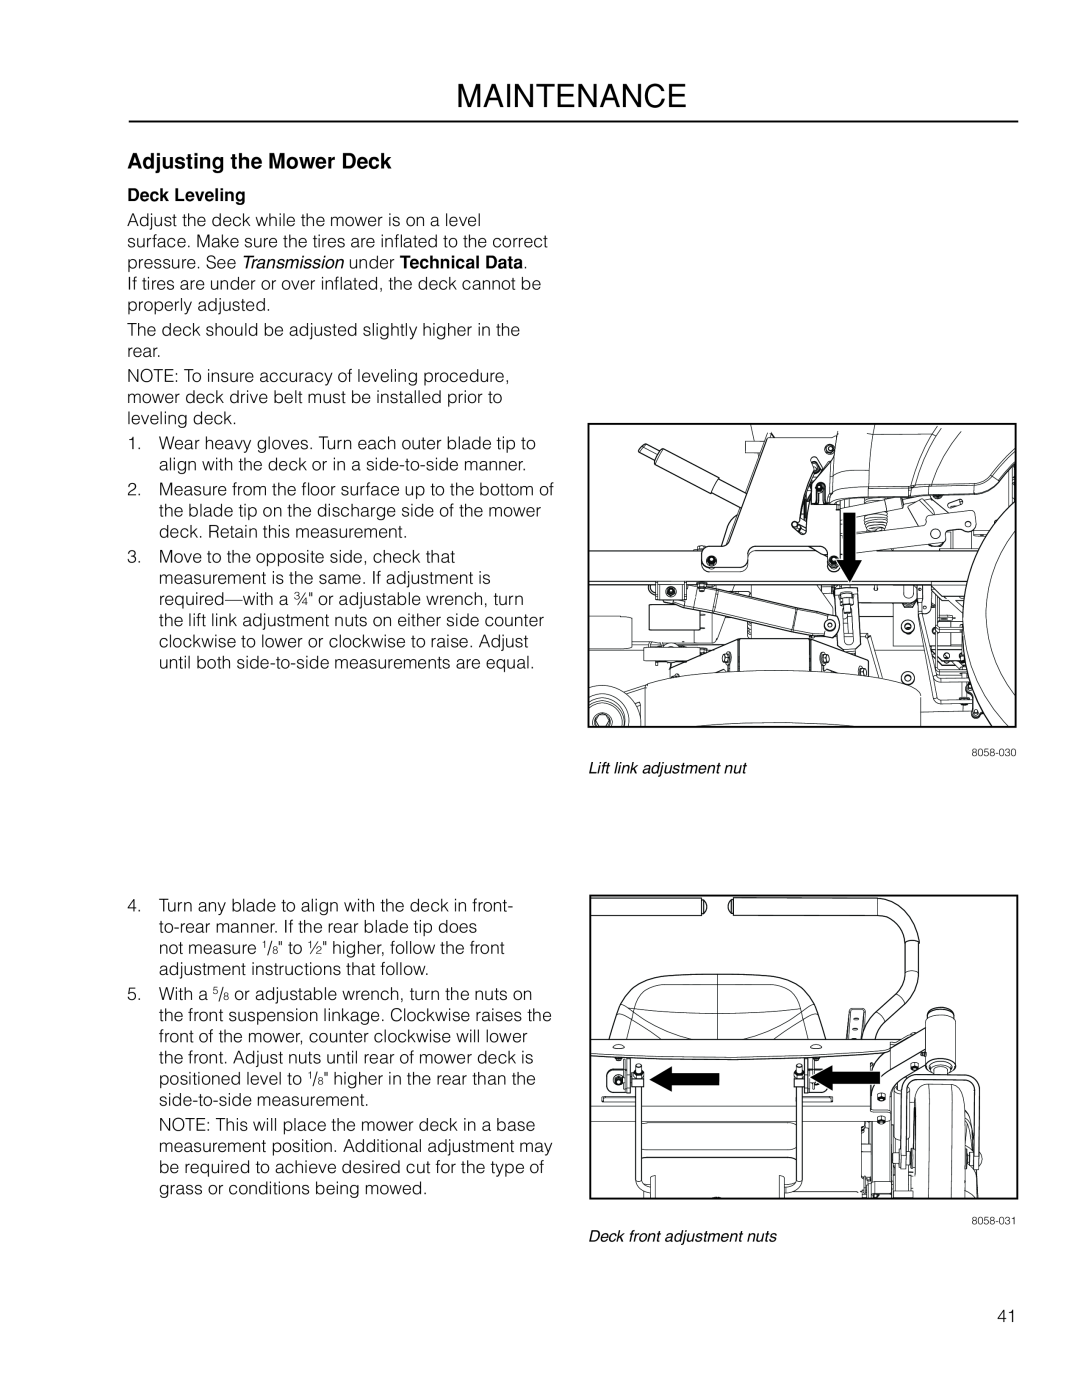 Dixon 966503601, SZ4619 CA manual Adjusting the Mower Deck, Deck Leveling, Maintenance 